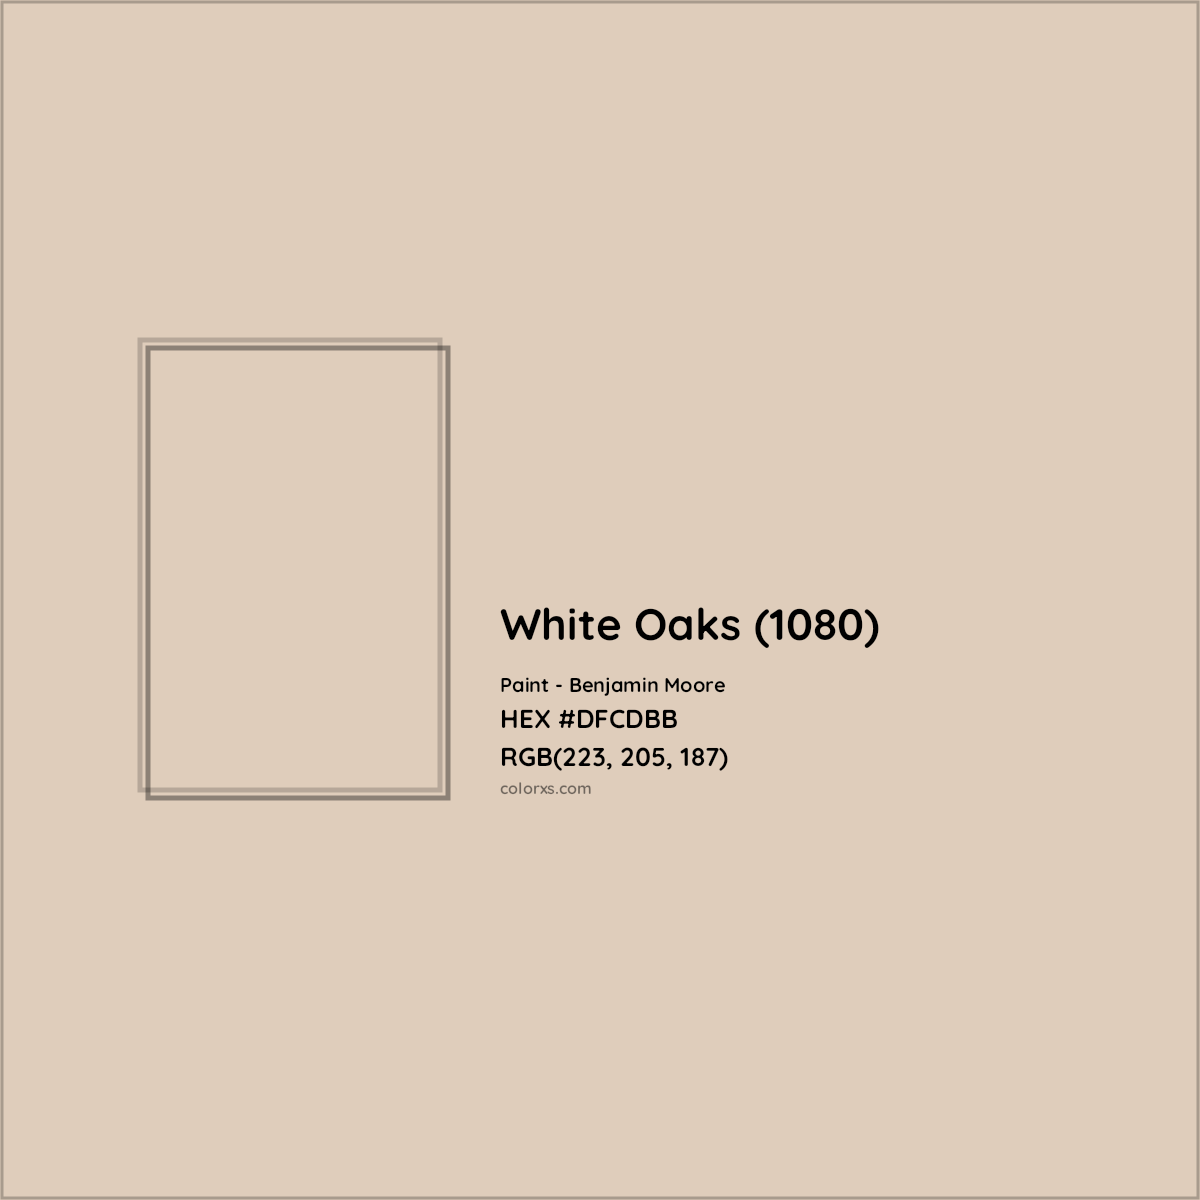 HEX #DFCDBB White Oaks (1080) Paint Benjamin Moore - Color Code